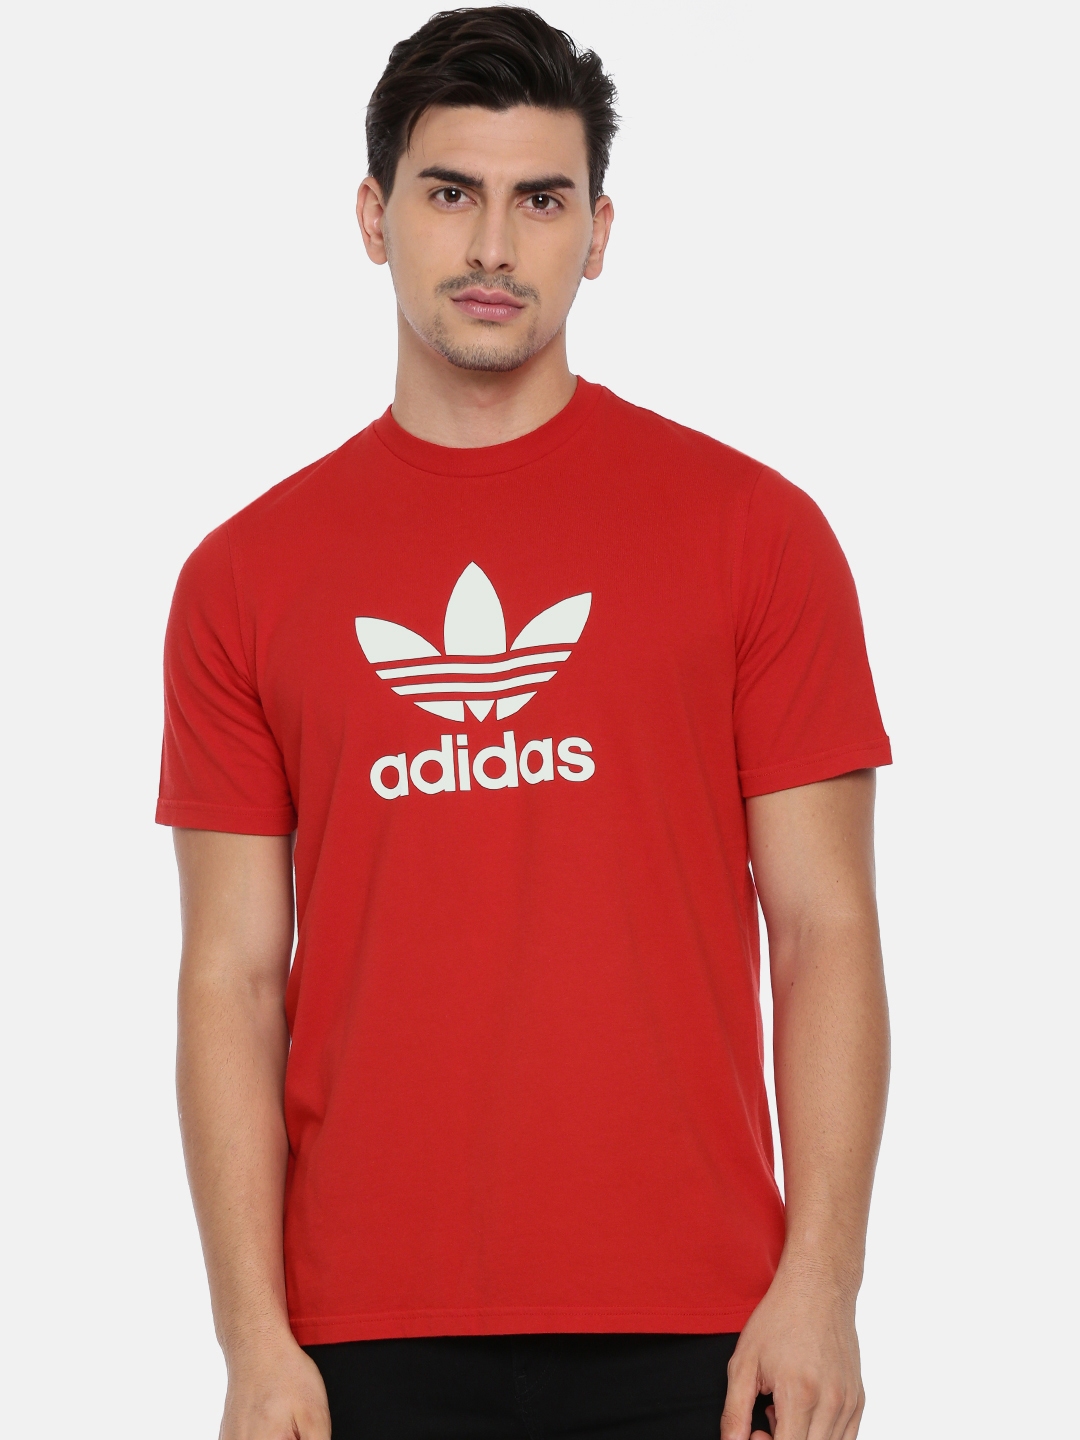 red adidas t shirt